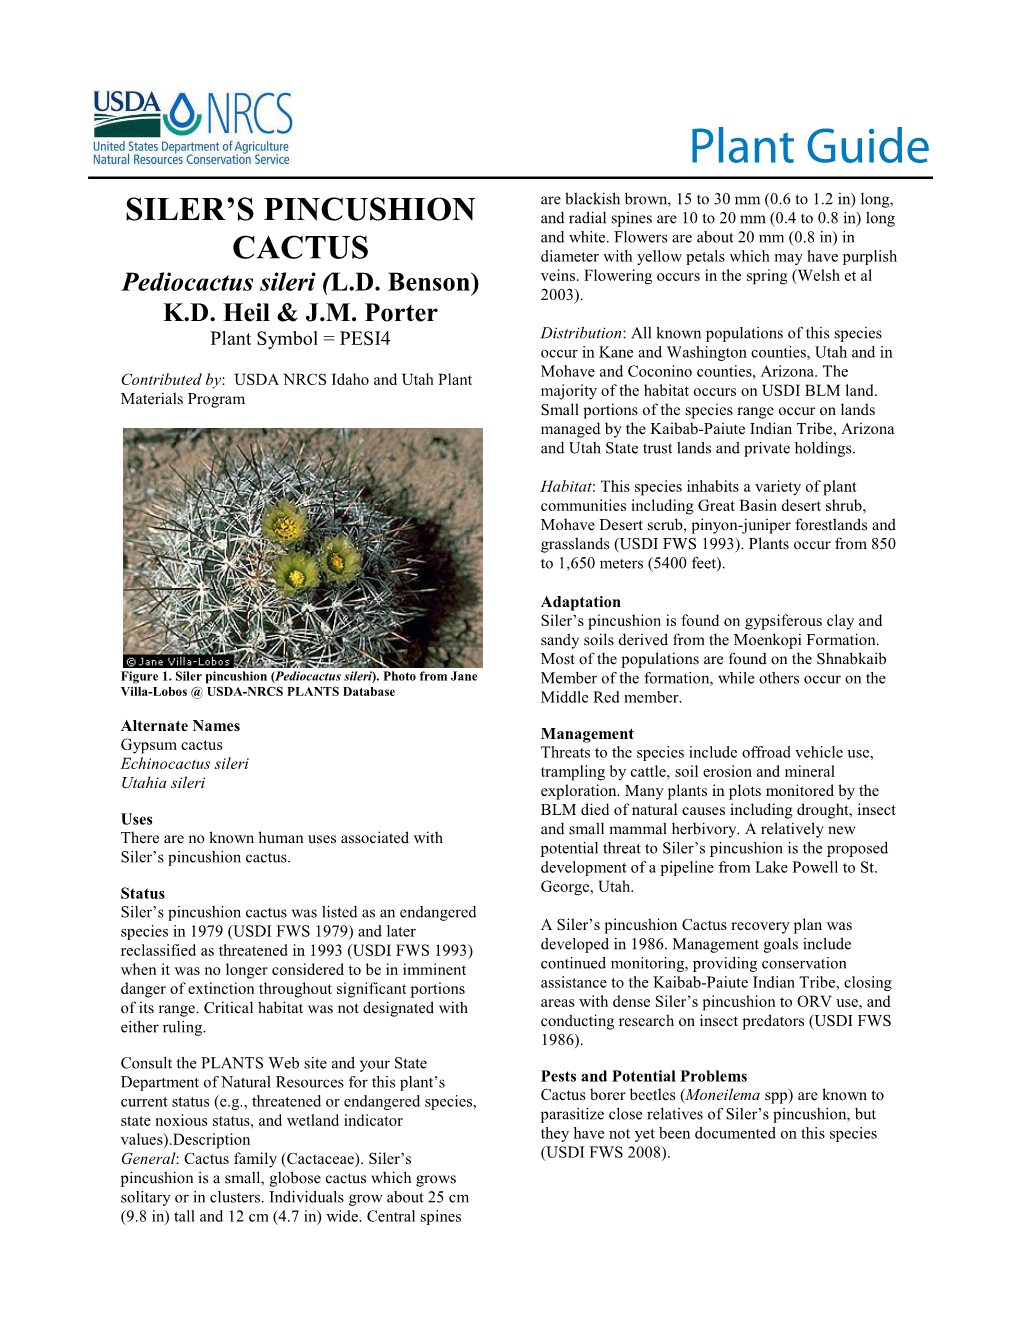 Plant Guide for Siler's Pincushion Cactus (Pediocactus Sileri)